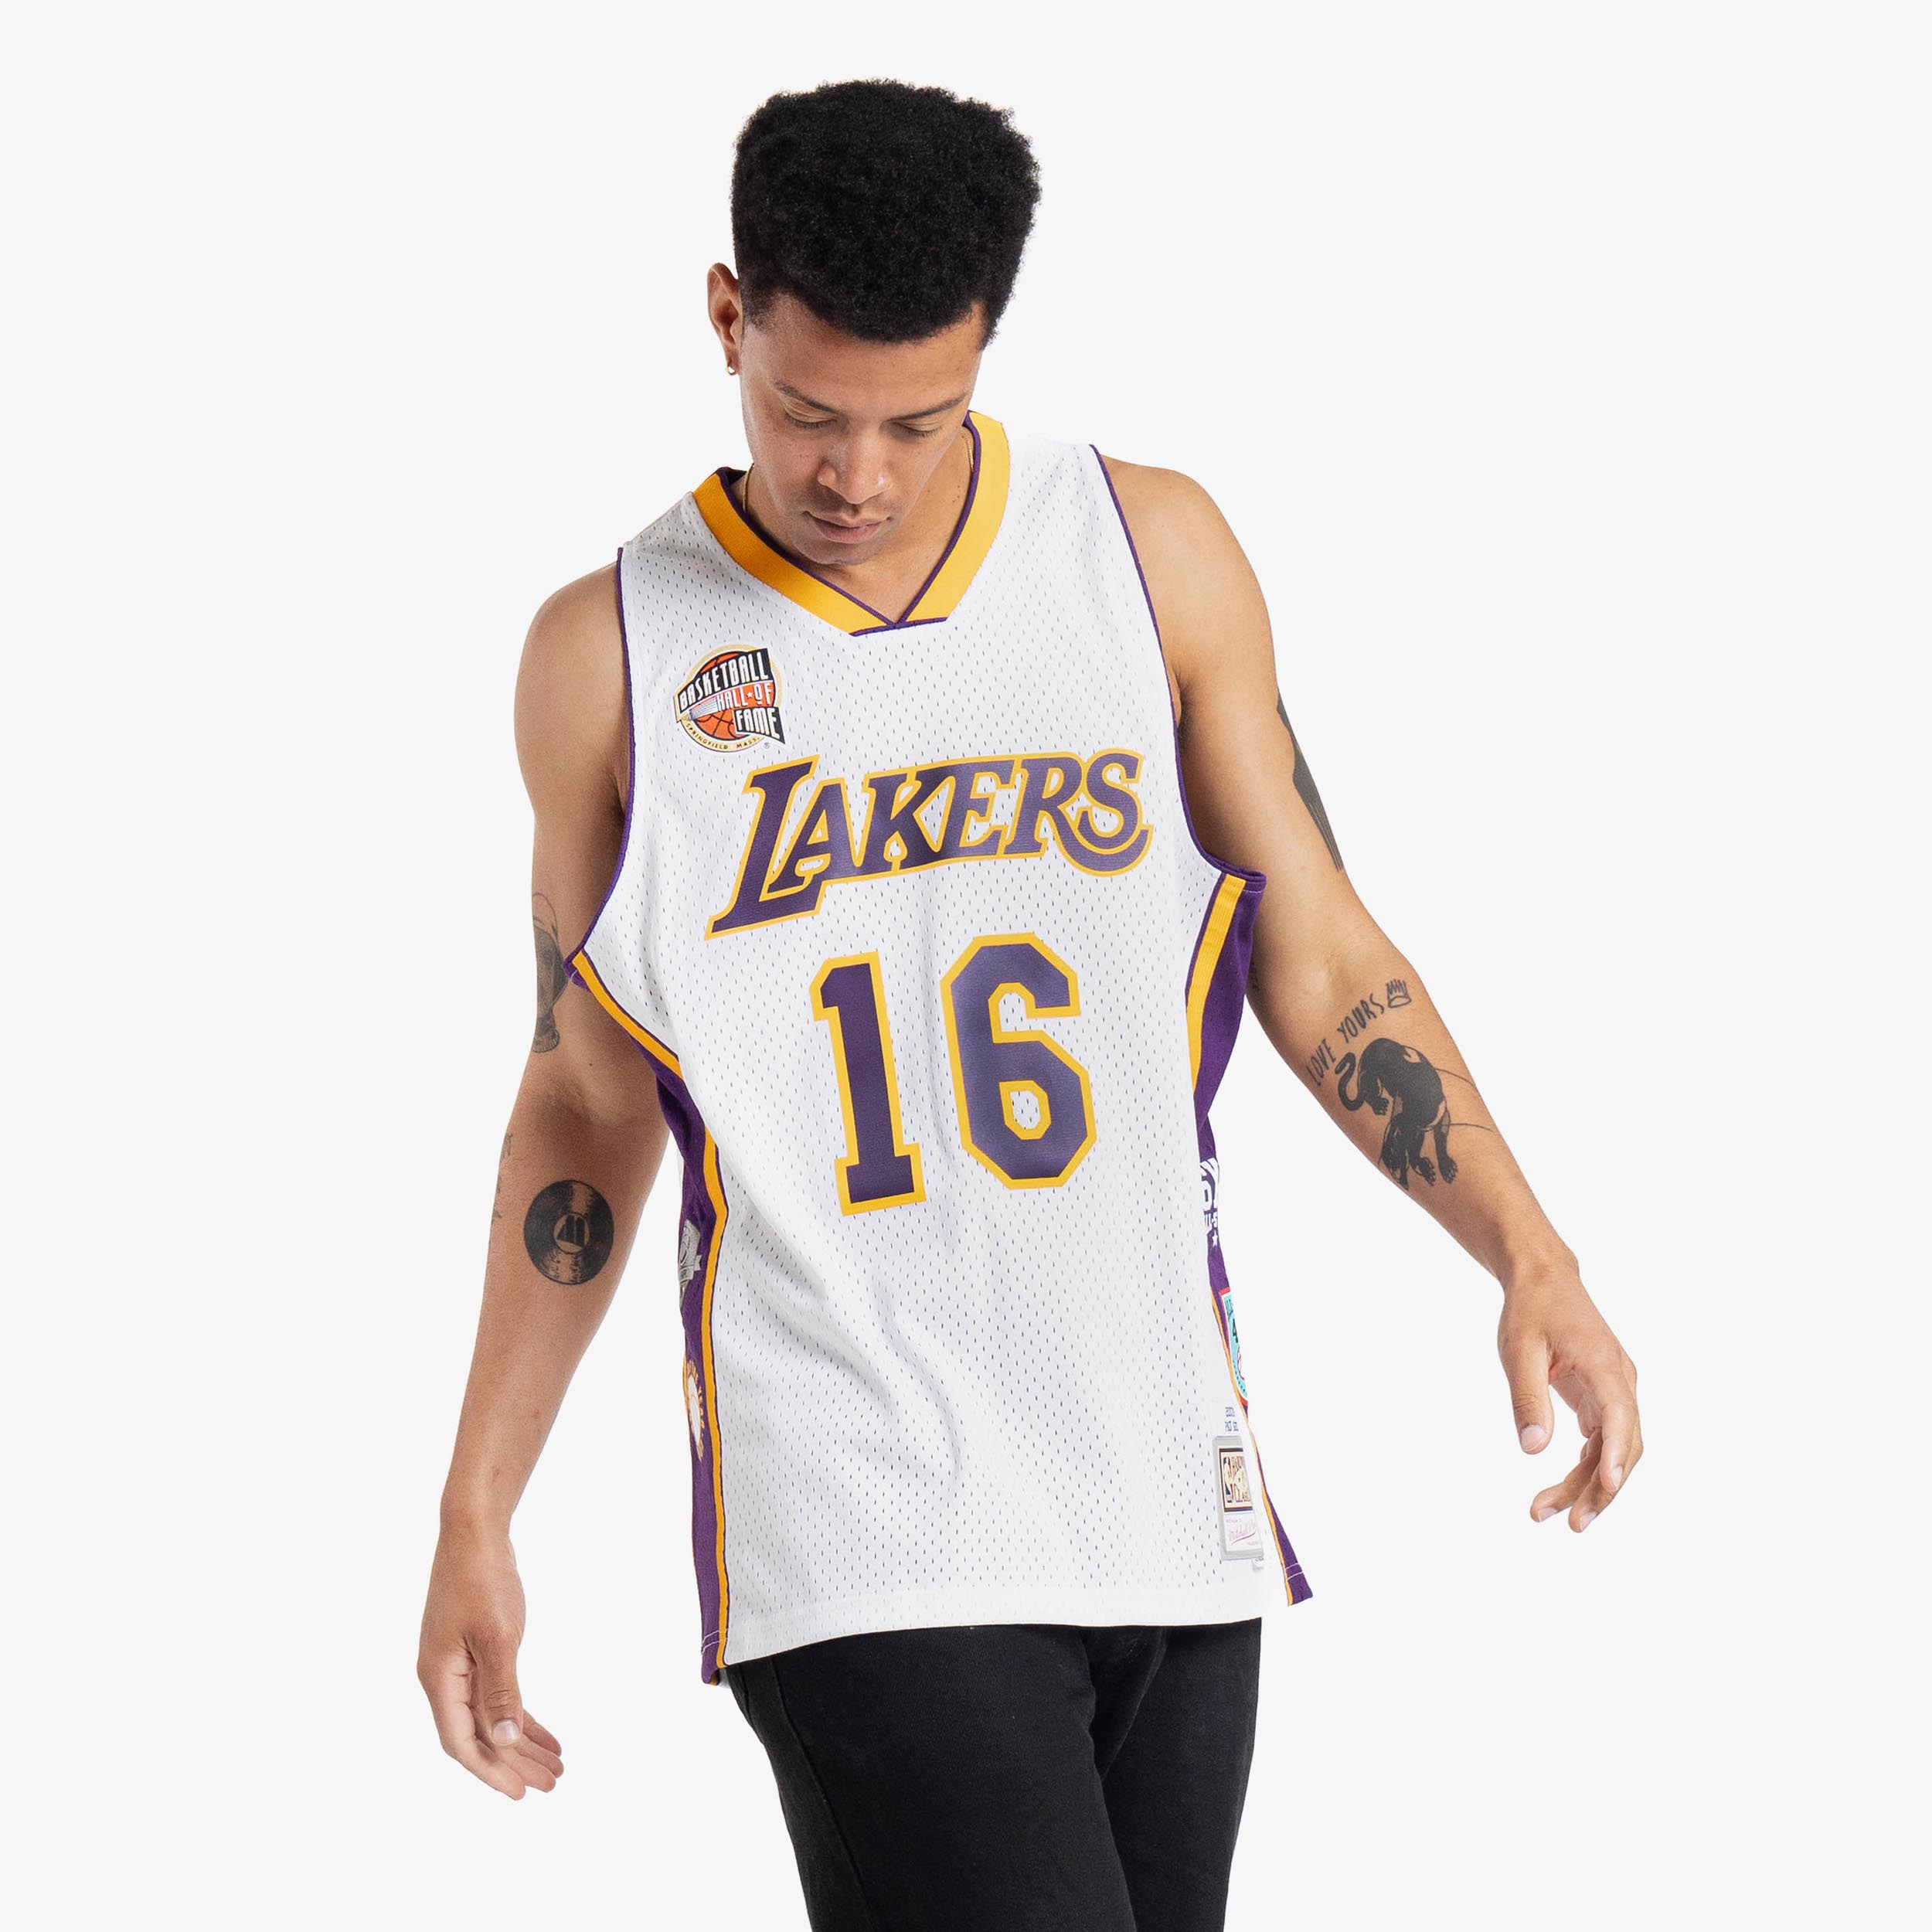 LA Lakers jersey신라카지노 PINK14.COM 신라카지노 신라카지노신라